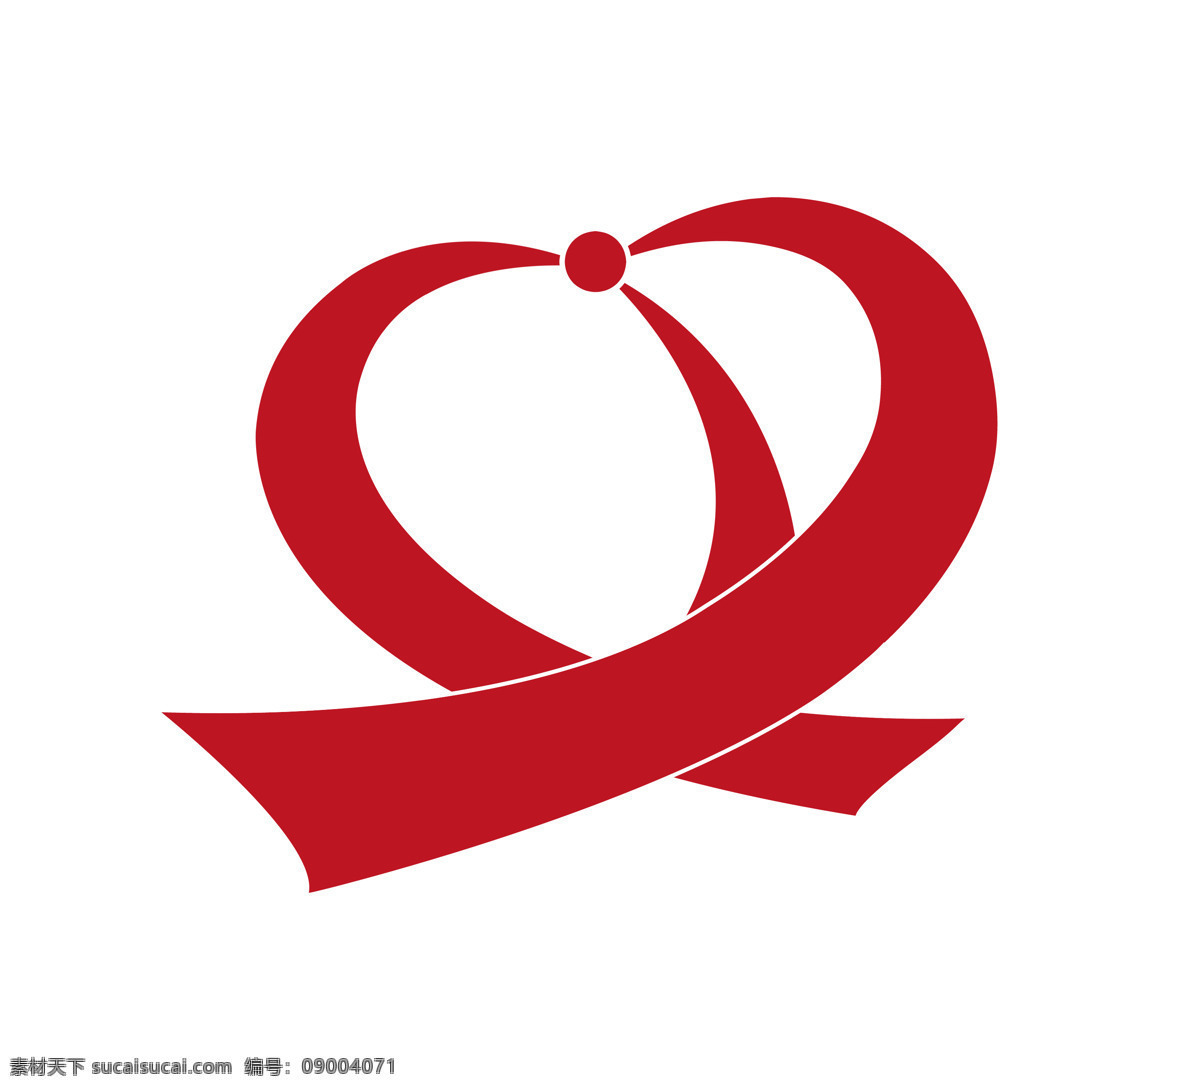 xd 心 型 logo 公益 慈善 字母xd 心型logo 爱心 标志图标 企业 标志